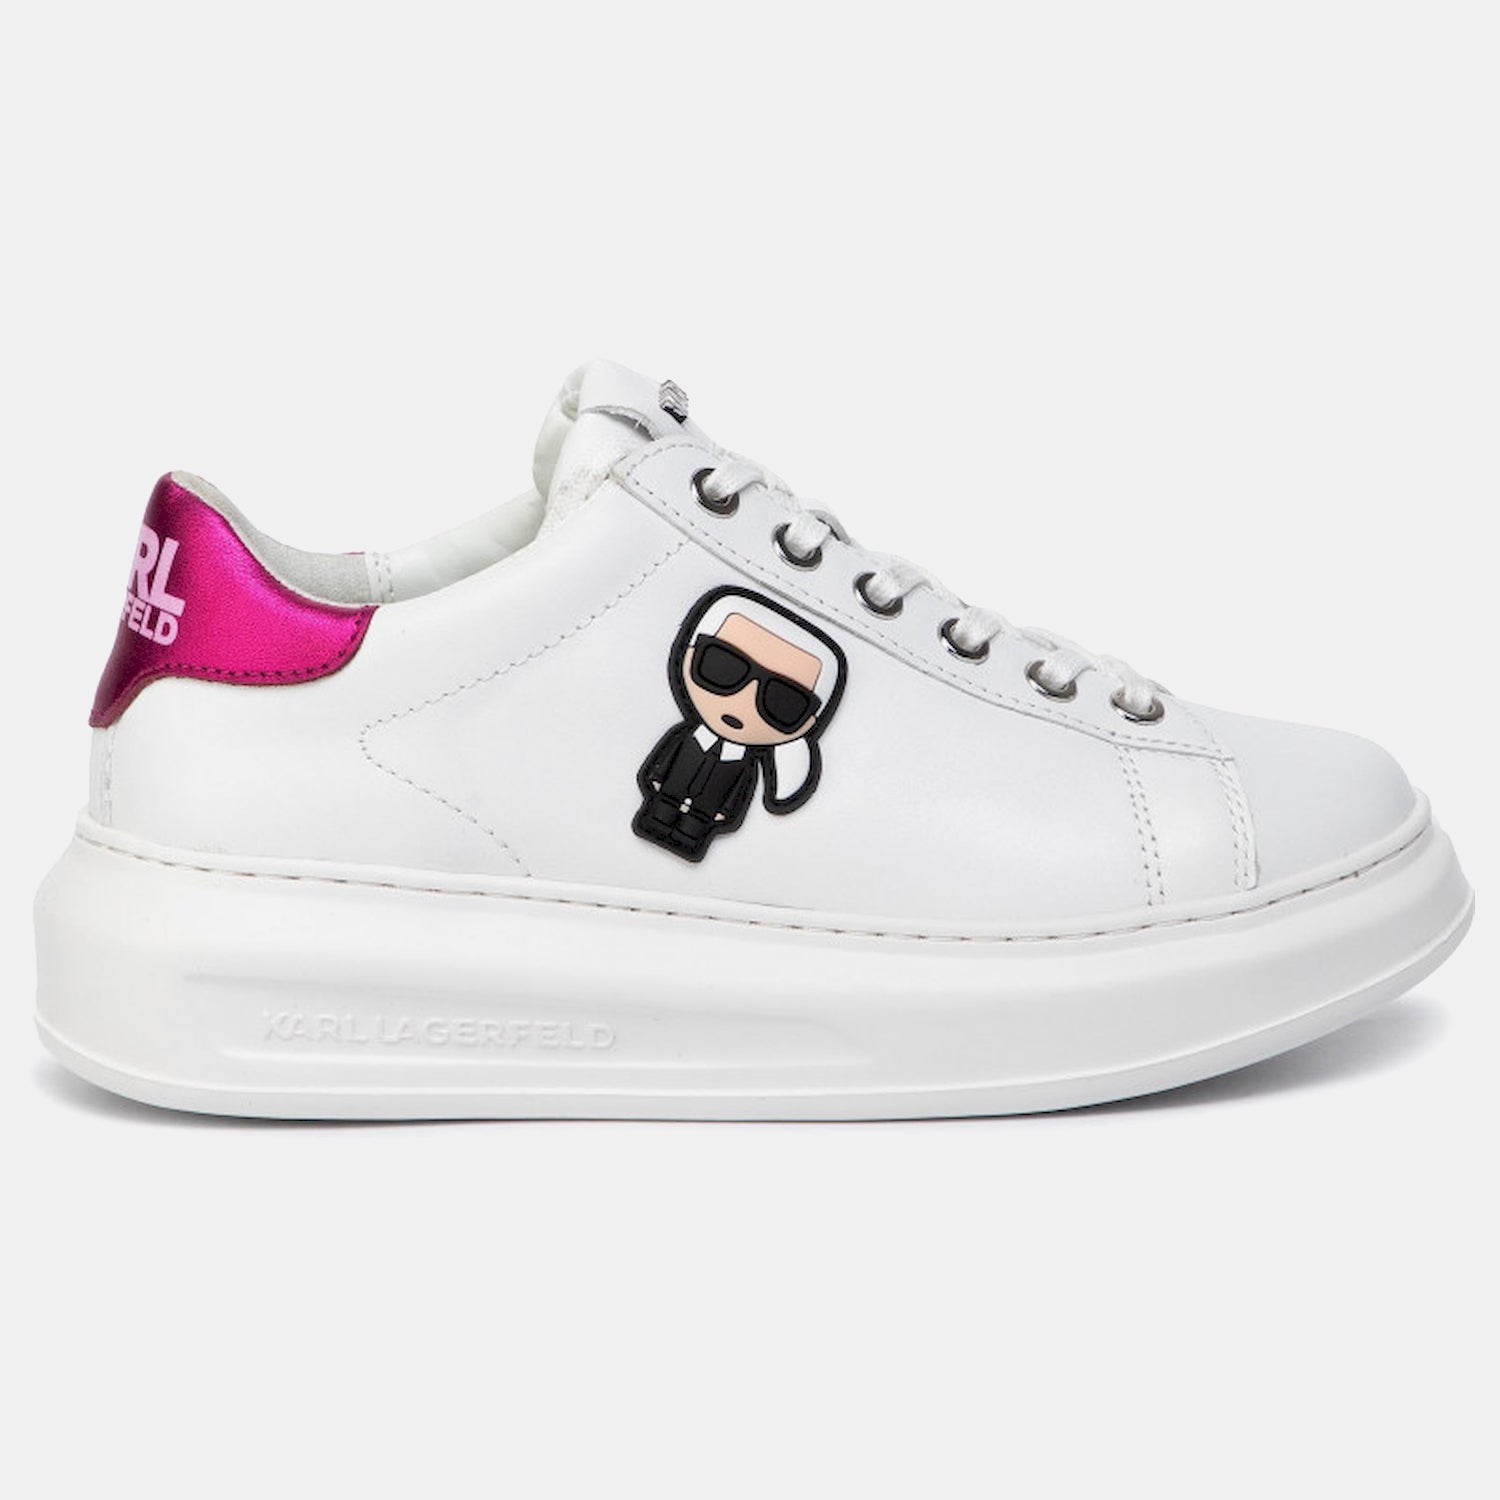 Karl Lagerfeld Sapatilhas Sneakers Shoes Kl62530 Whi Pink Branco Rosa_shot2